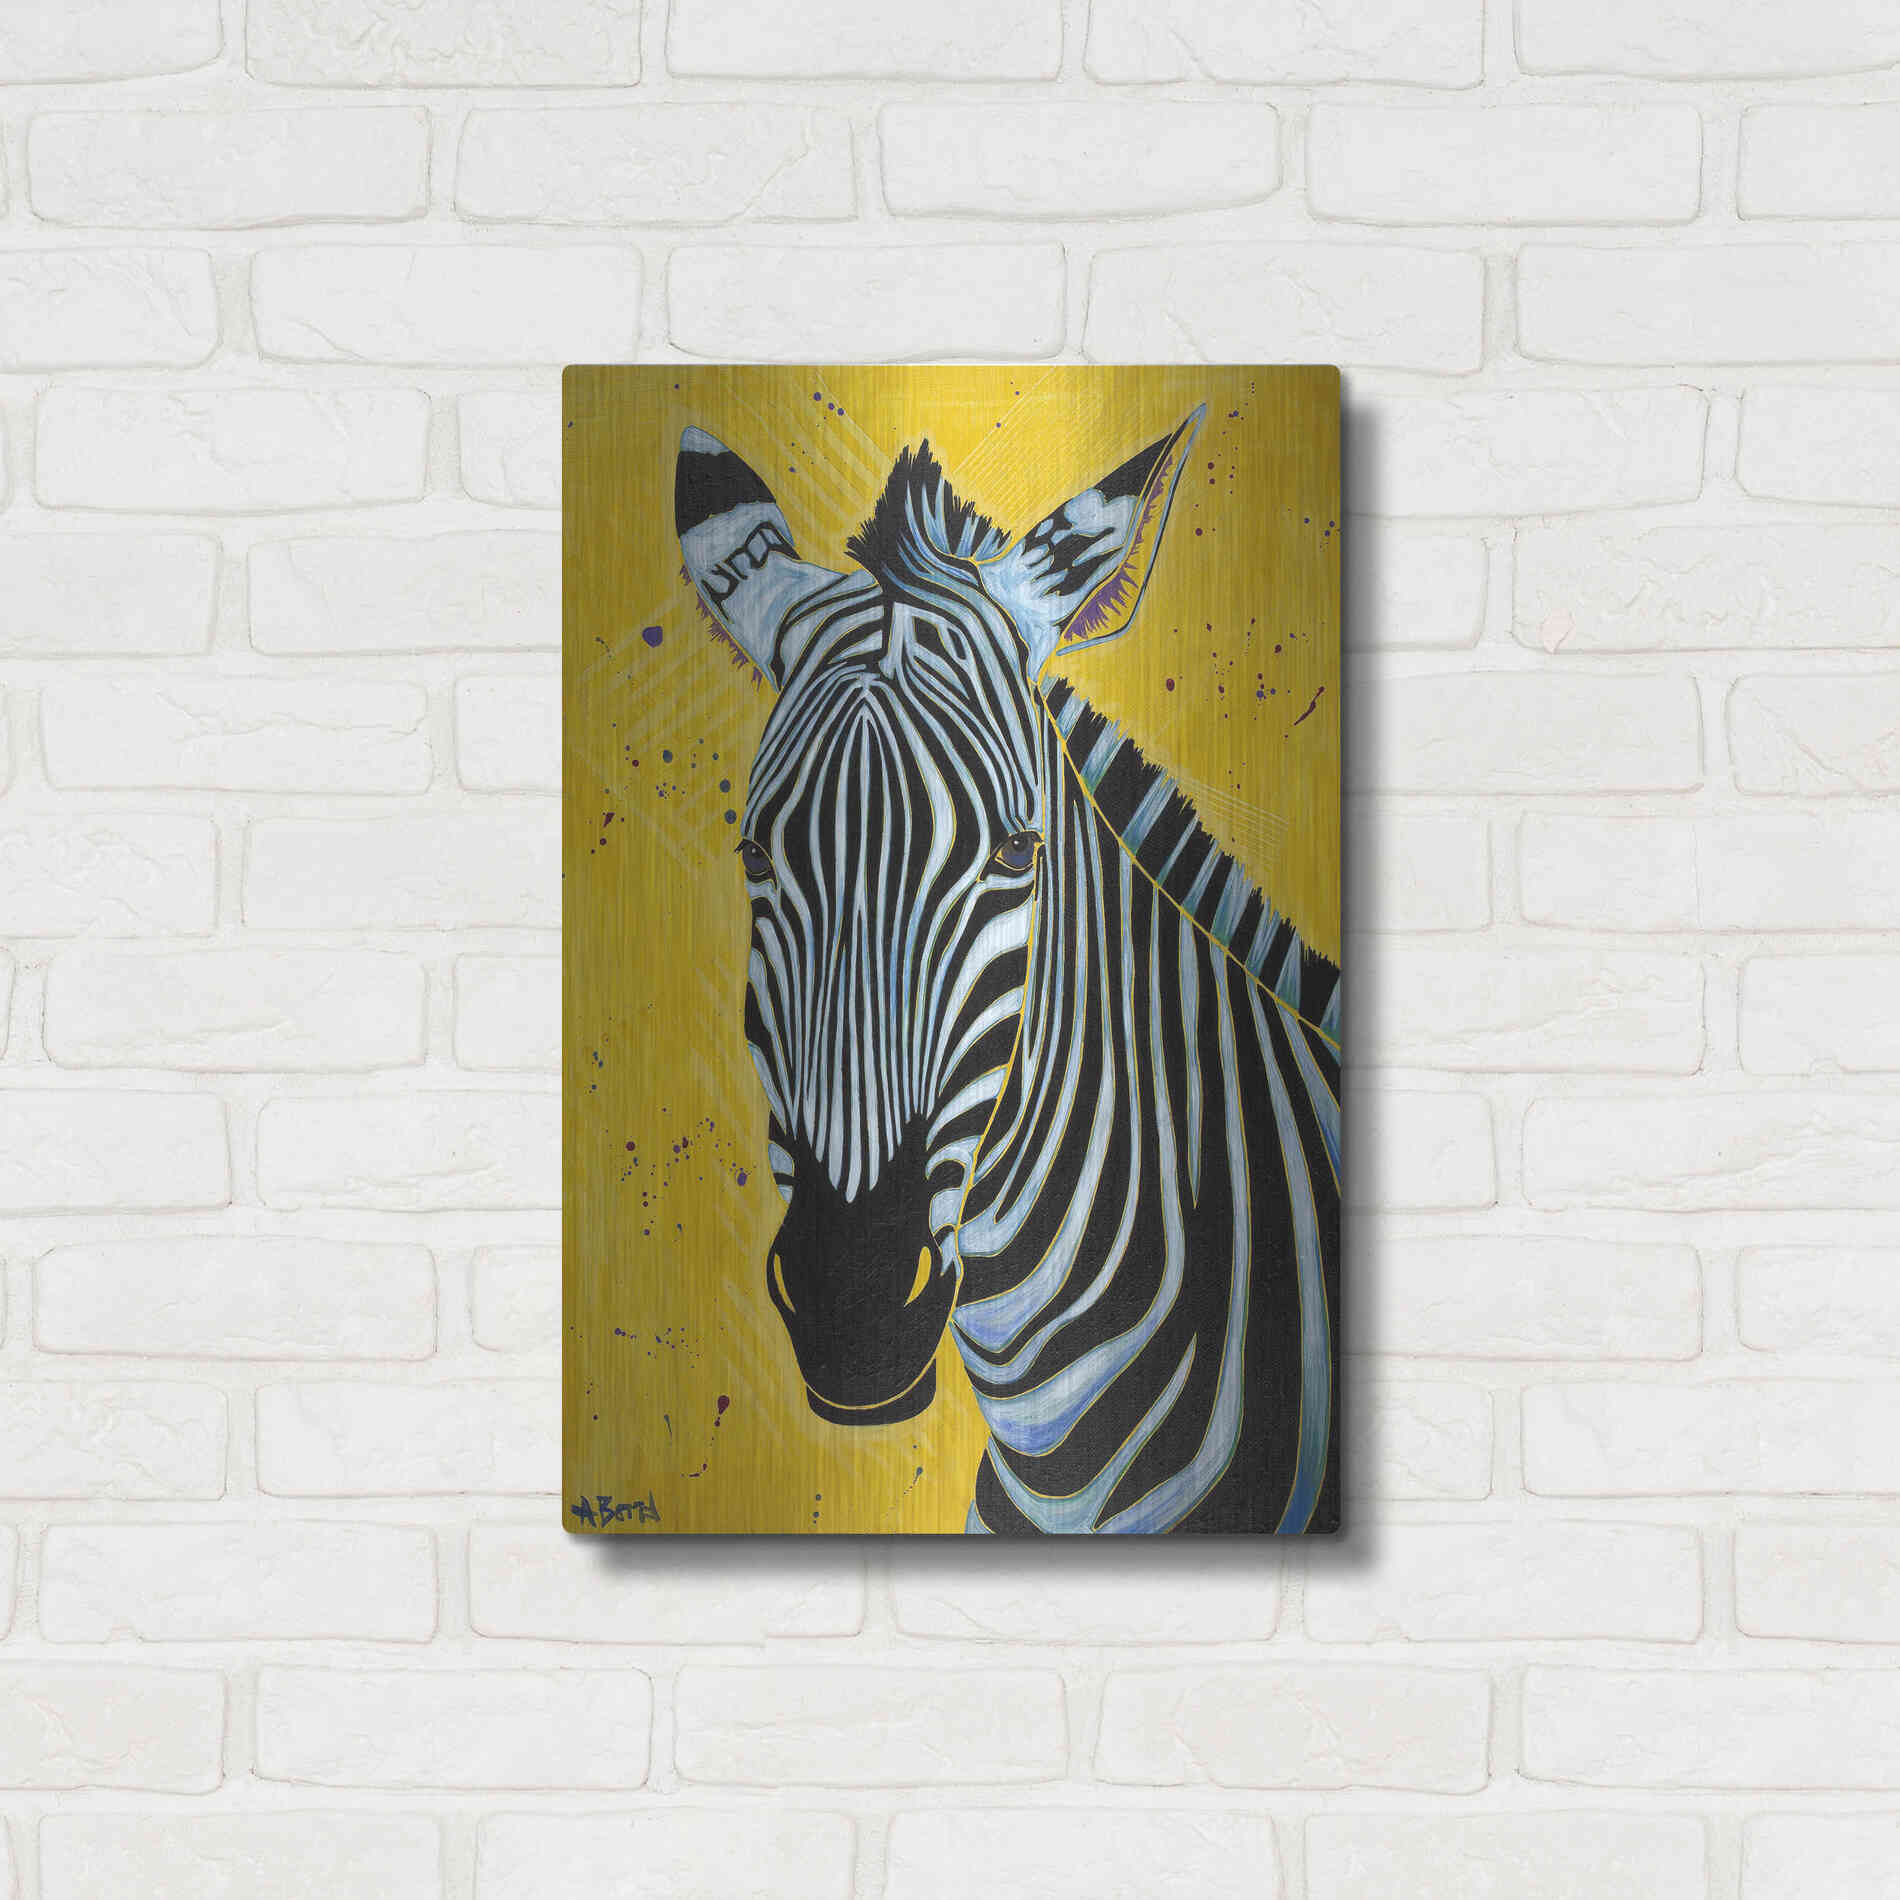 Luxe Metal Art 'Zebra' by Angela Bond Metal Wall Art,16x24